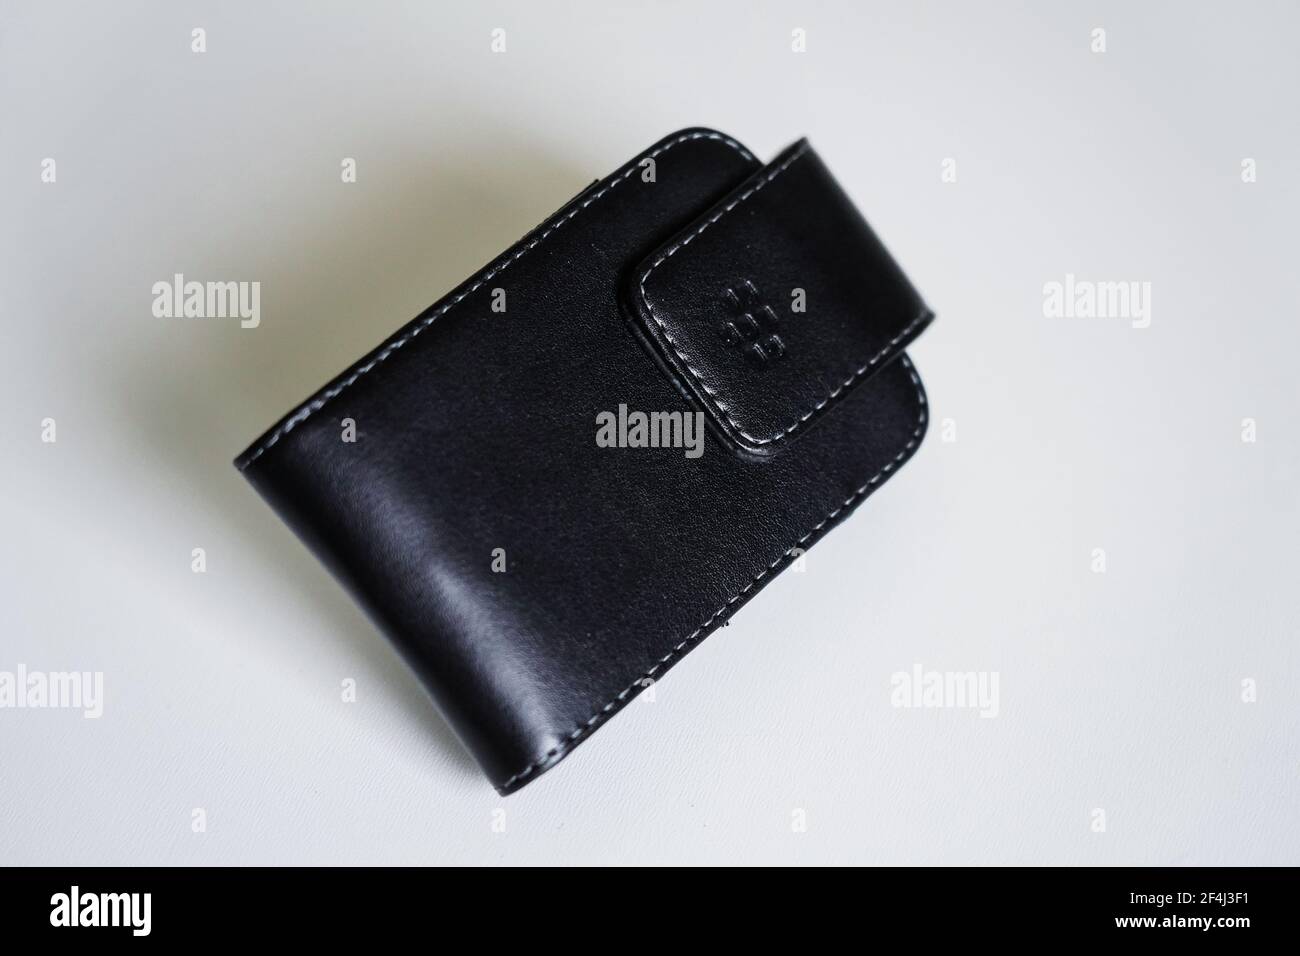 blackberry phone leather case Stock Photo